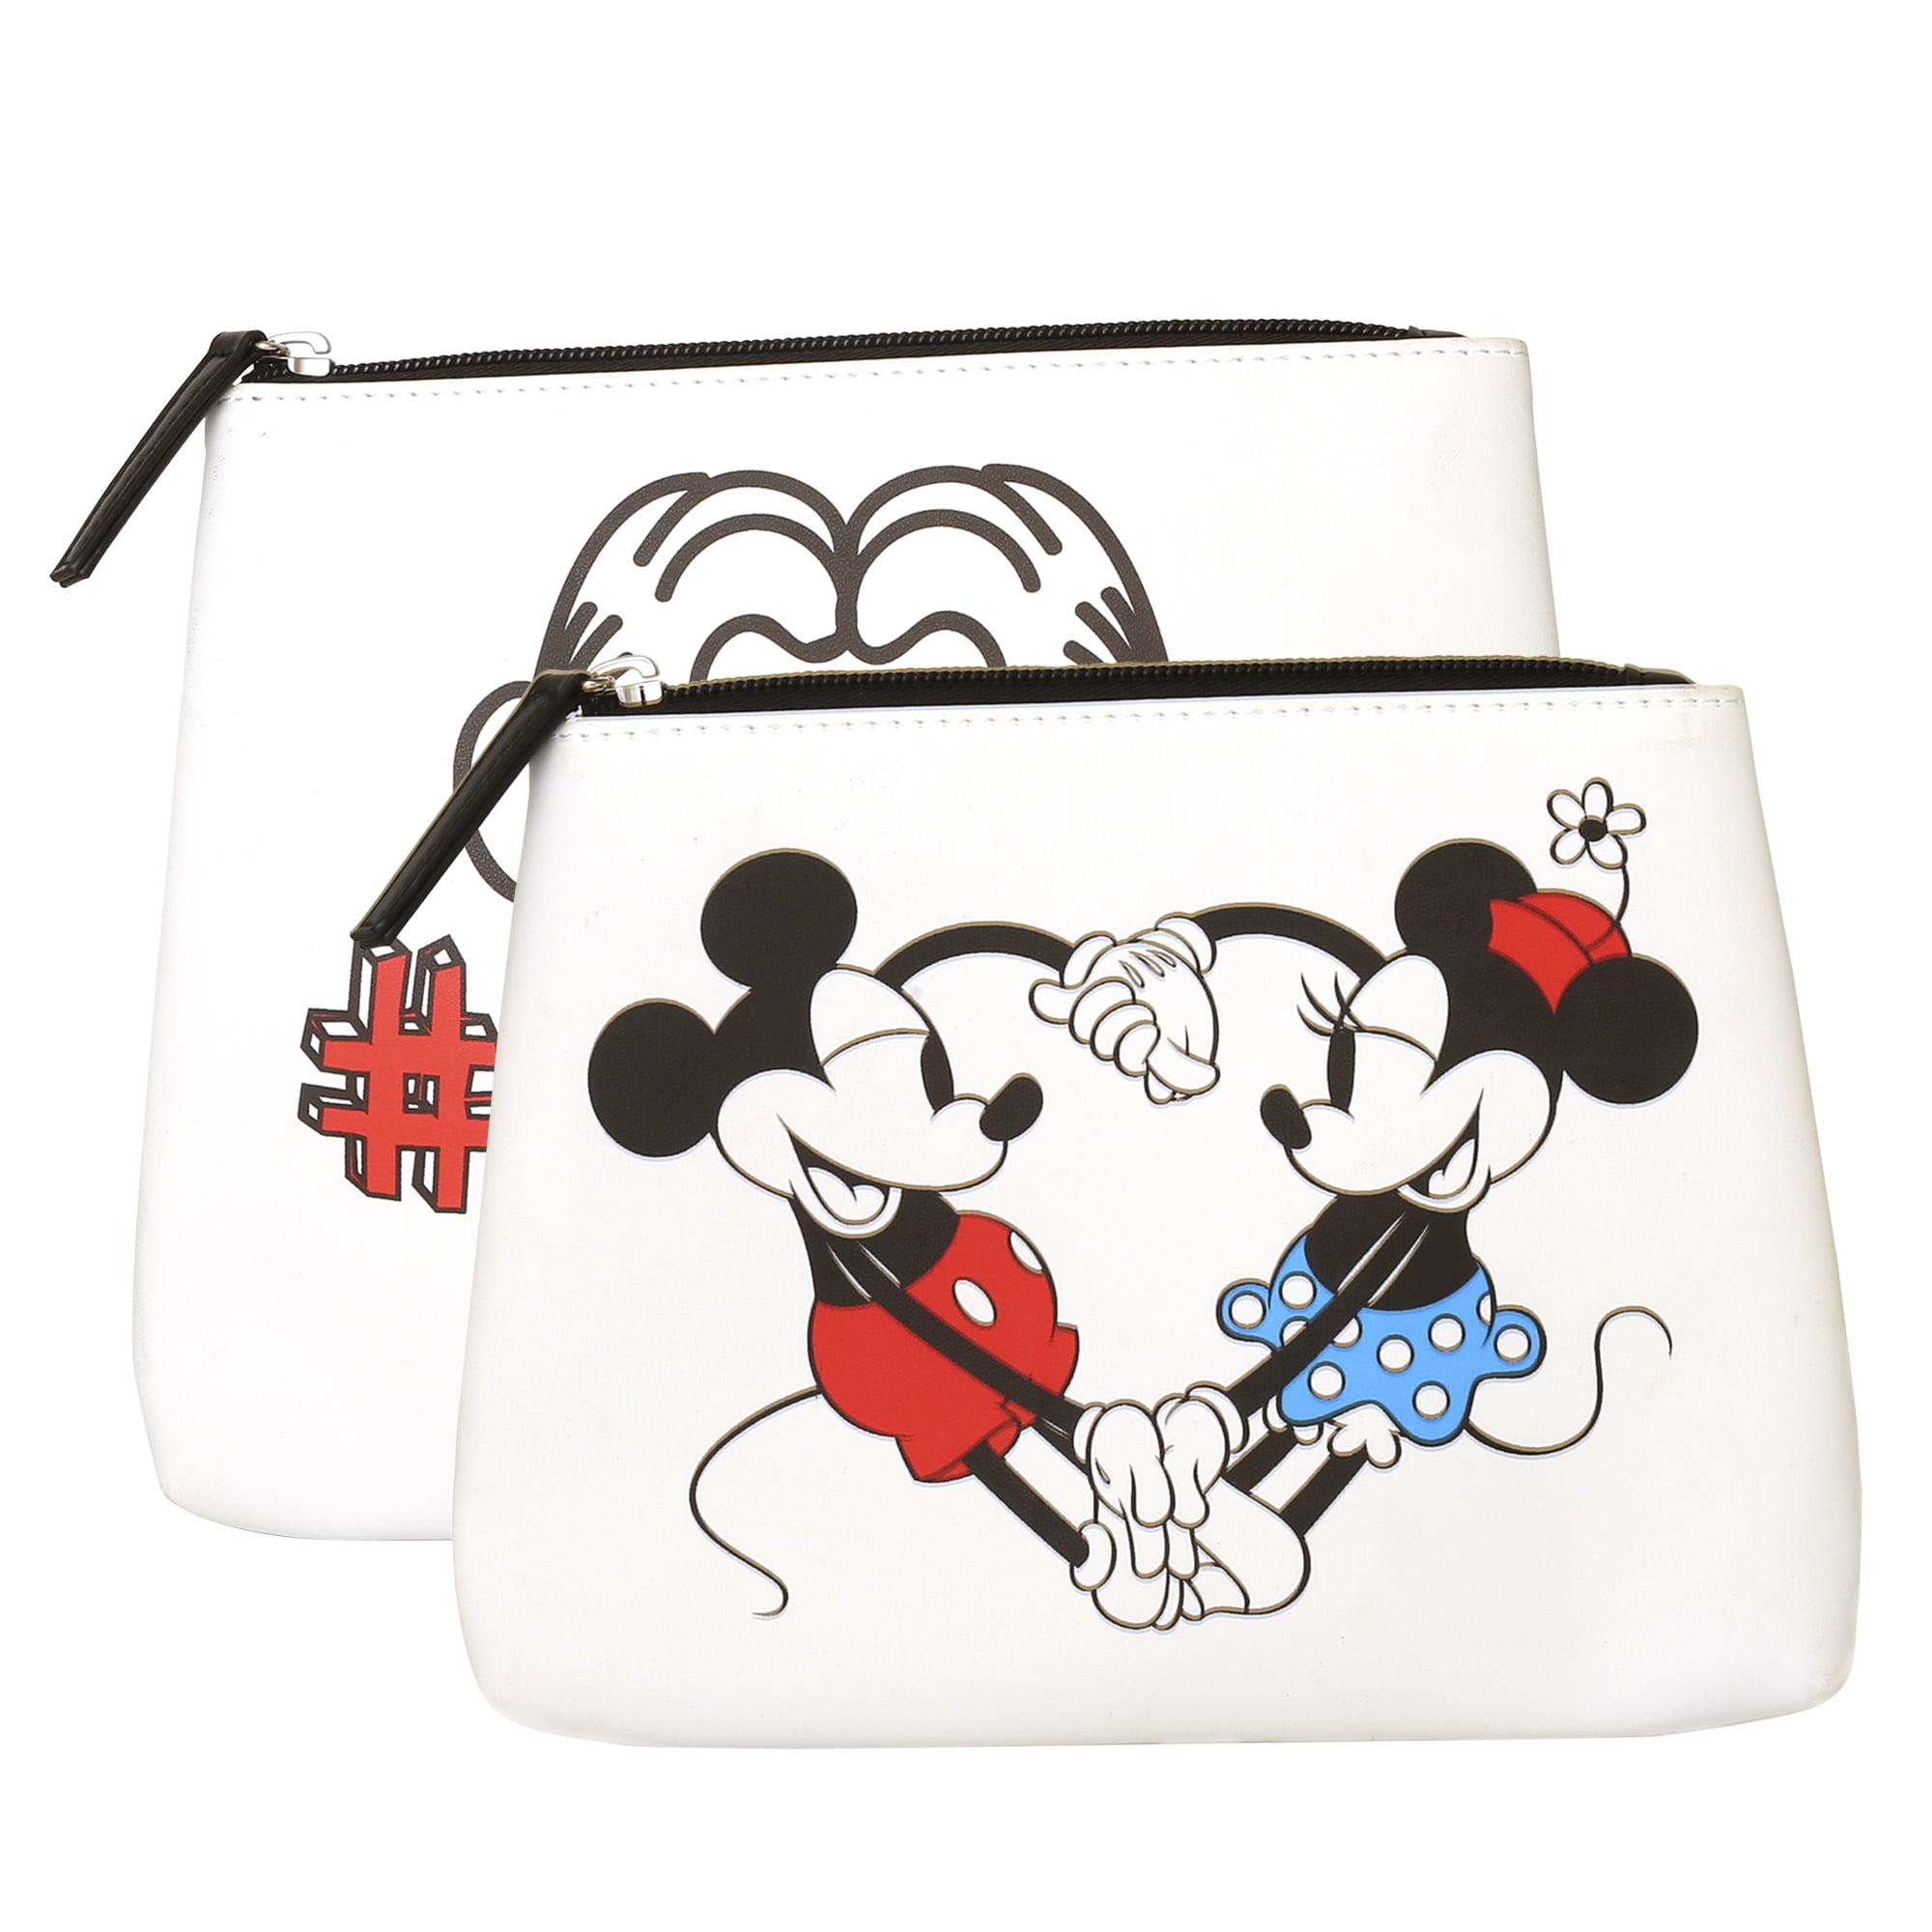 Disney Minnie Mouse 3-Piece Travel Set Makeup Bags Accessories Pouches CUTE NEW 